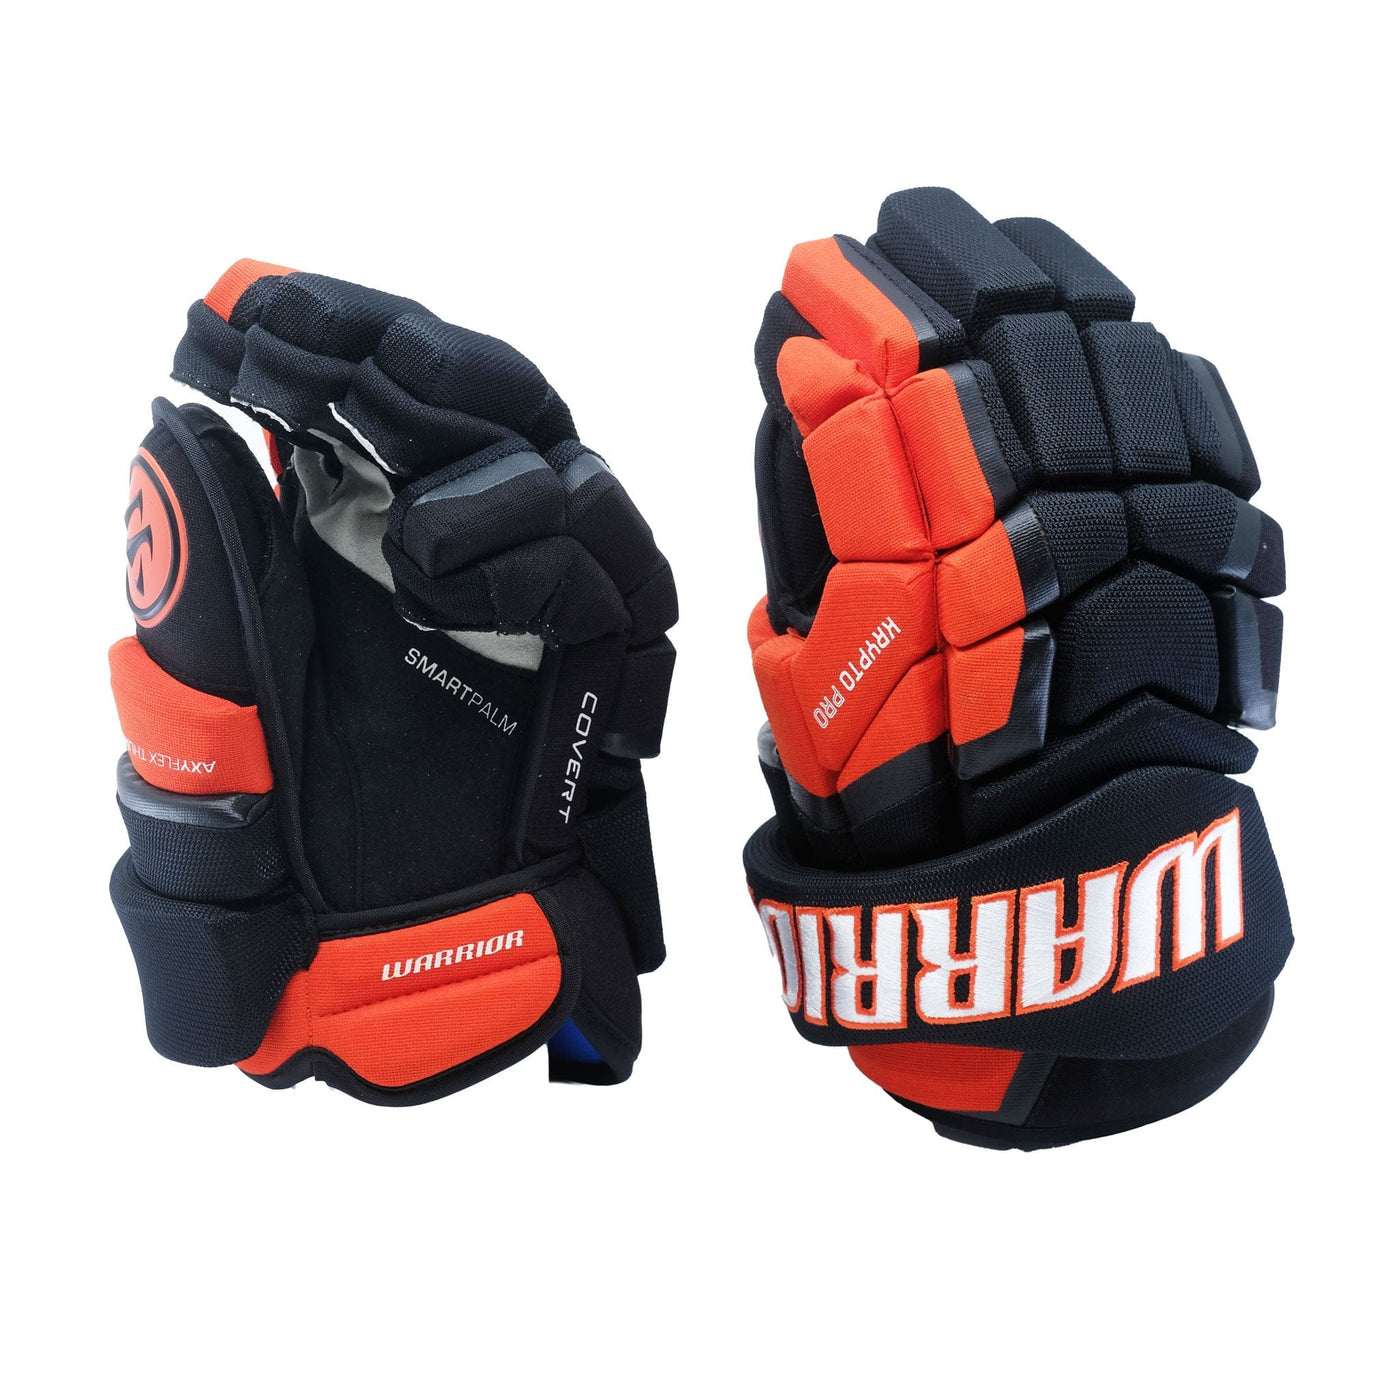 Warrior Covert Krypto Pro Senior Hockey Gloves (2017)